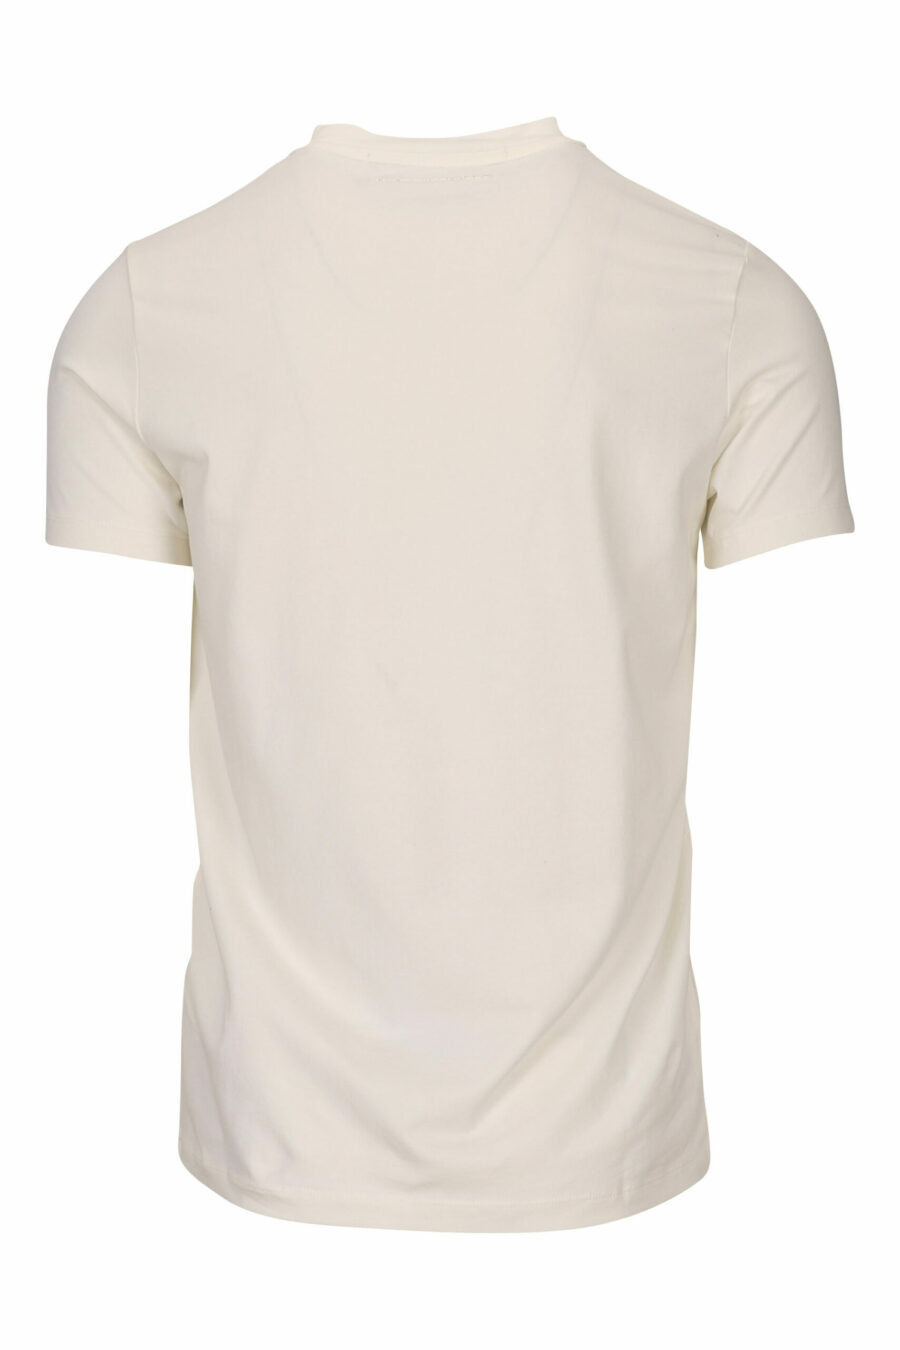 Weißes T-Shirt mit monochromem Maxilogo "rue st guillaume" - 4062226678124 1 skaliert